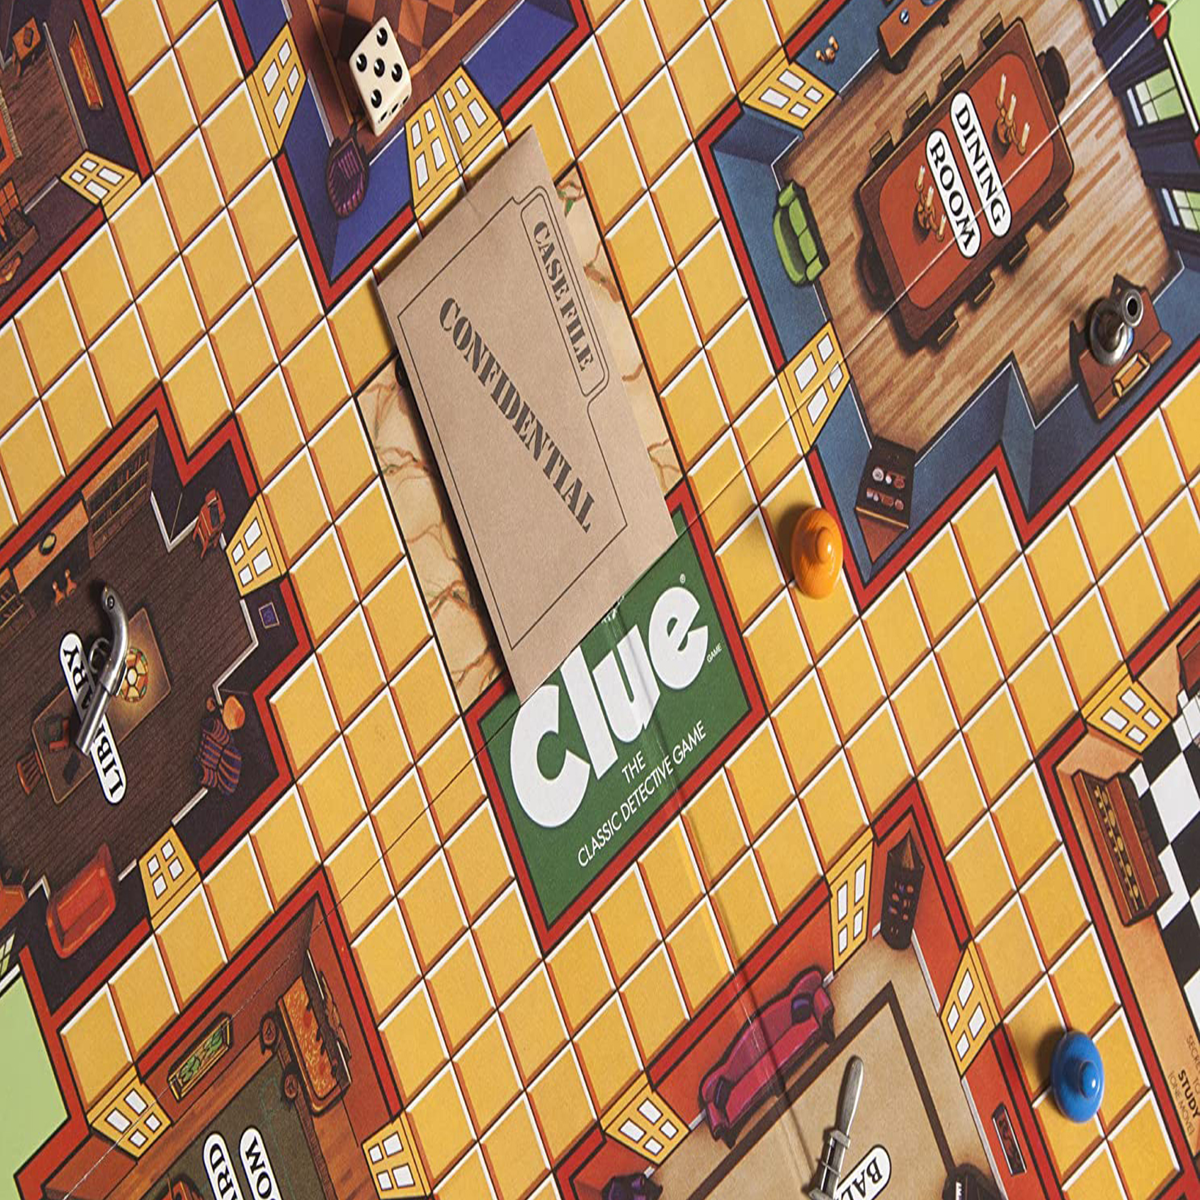 15 Drunken Twists On Classic Board Games  Classic board games, Old school  toys, Old school board games